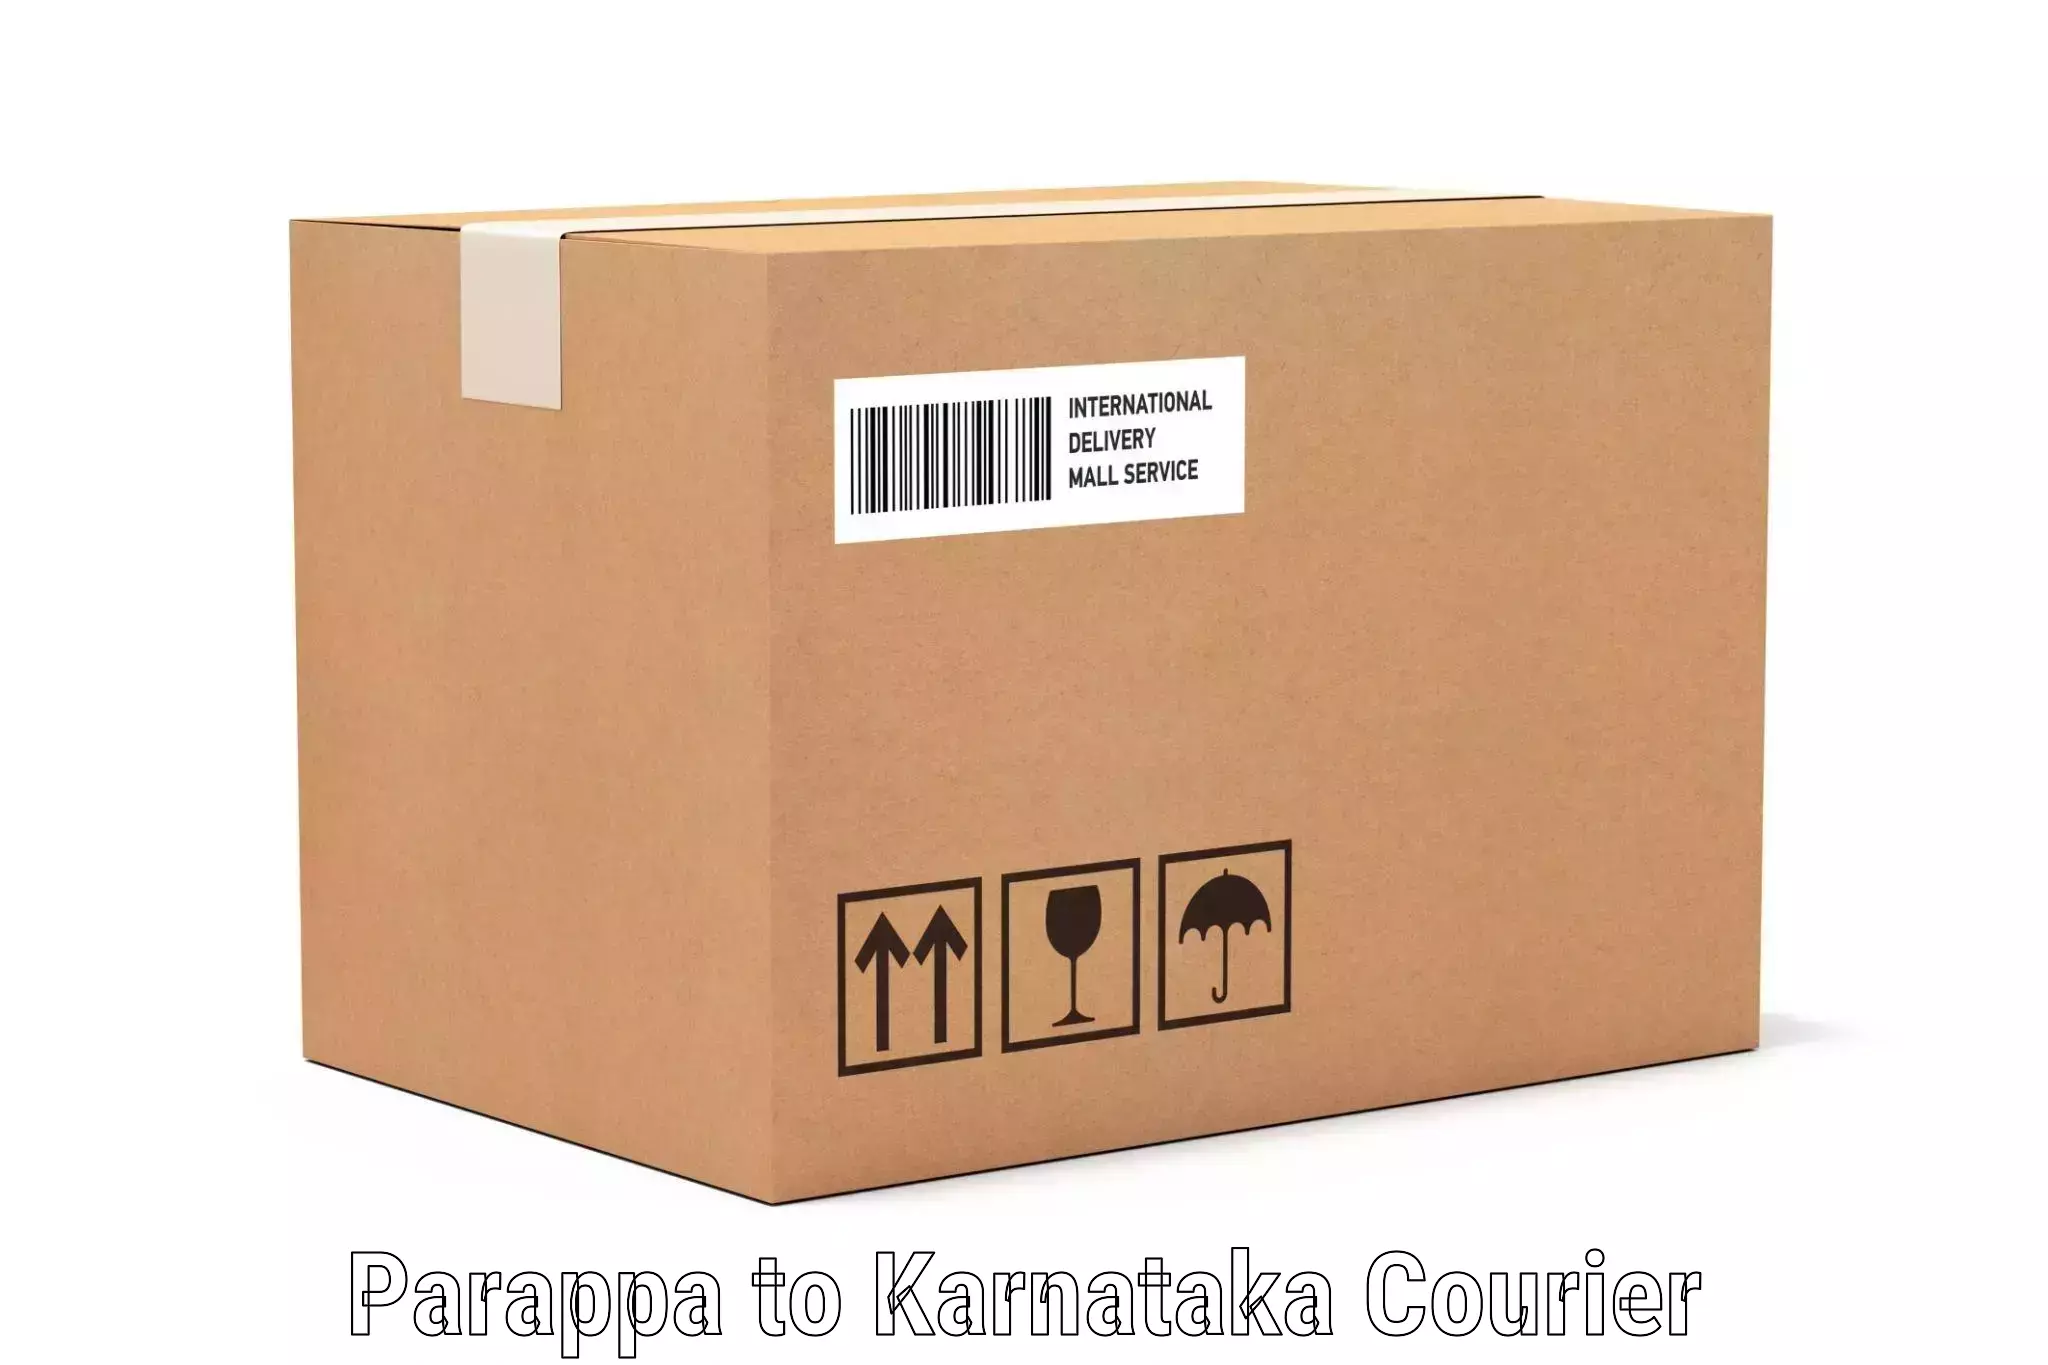 Luggage transport solutions Parappa to Karnataka